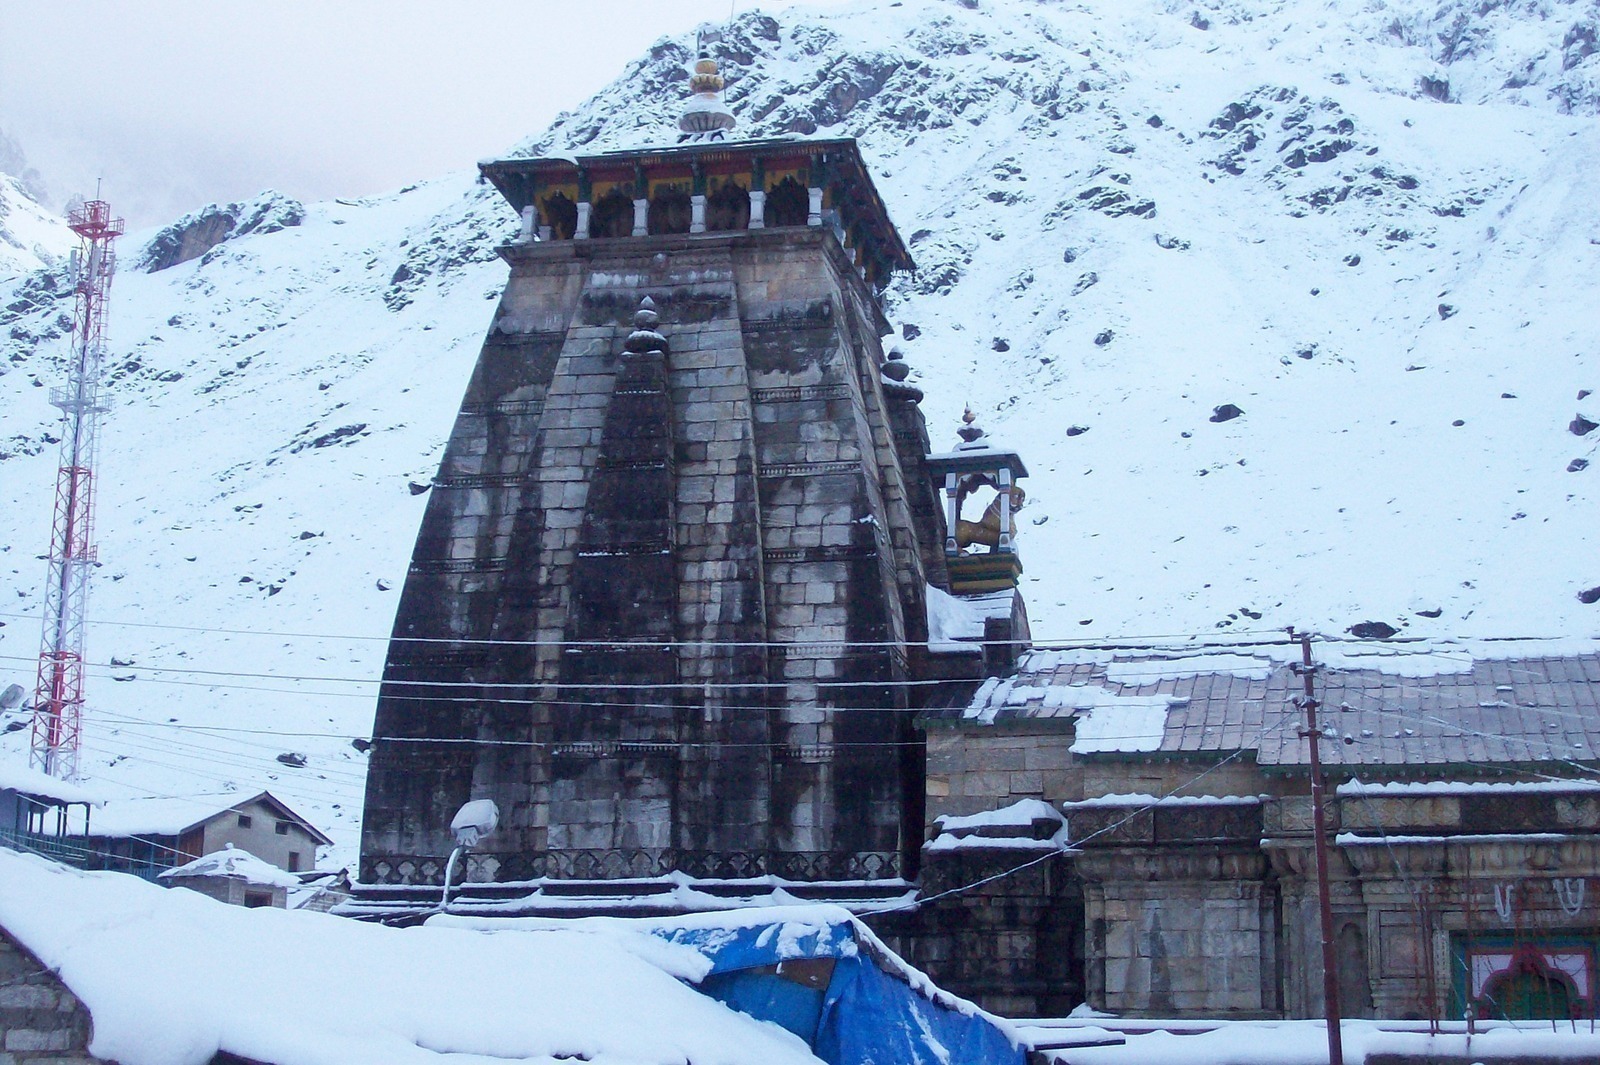 Image Name-kedarnath temple in winter